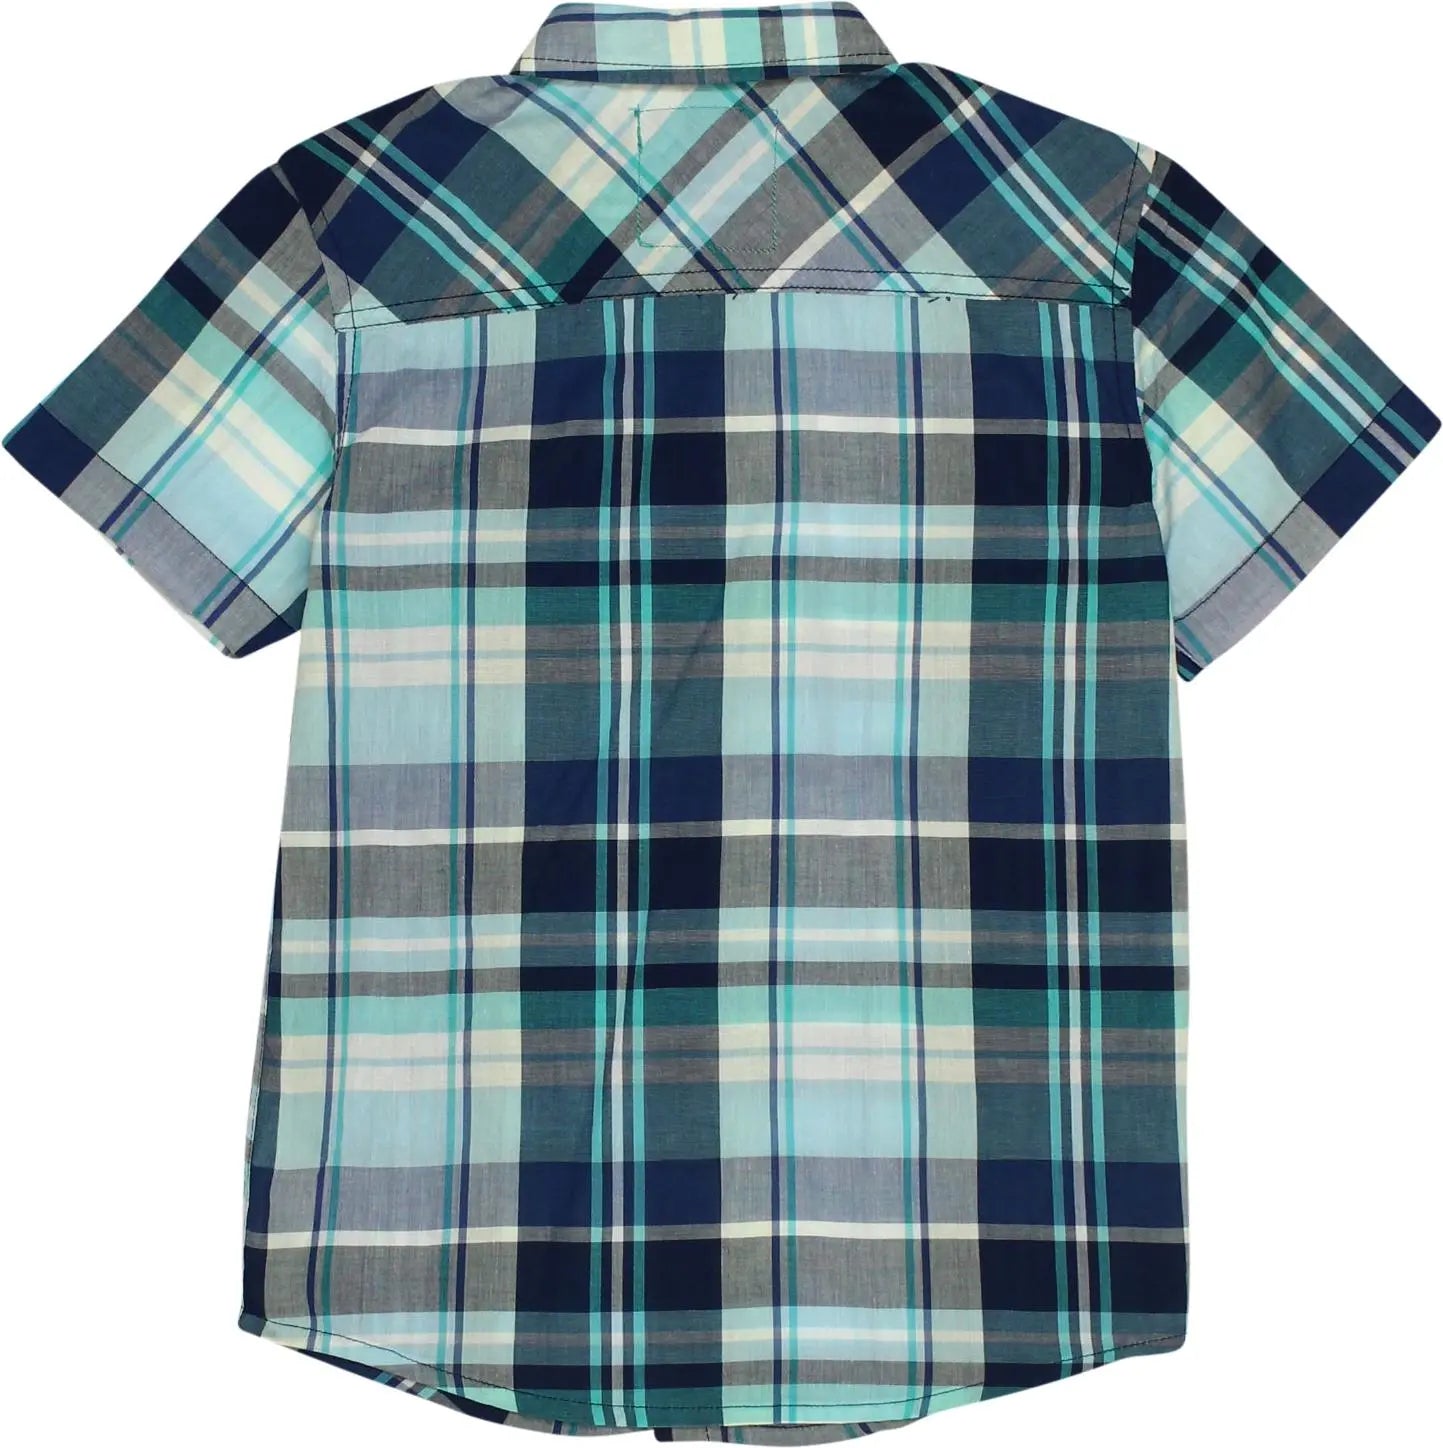 Primark - Blue Short Sleeve Shirt- ThriftTale.com - Vintage and second handclothing